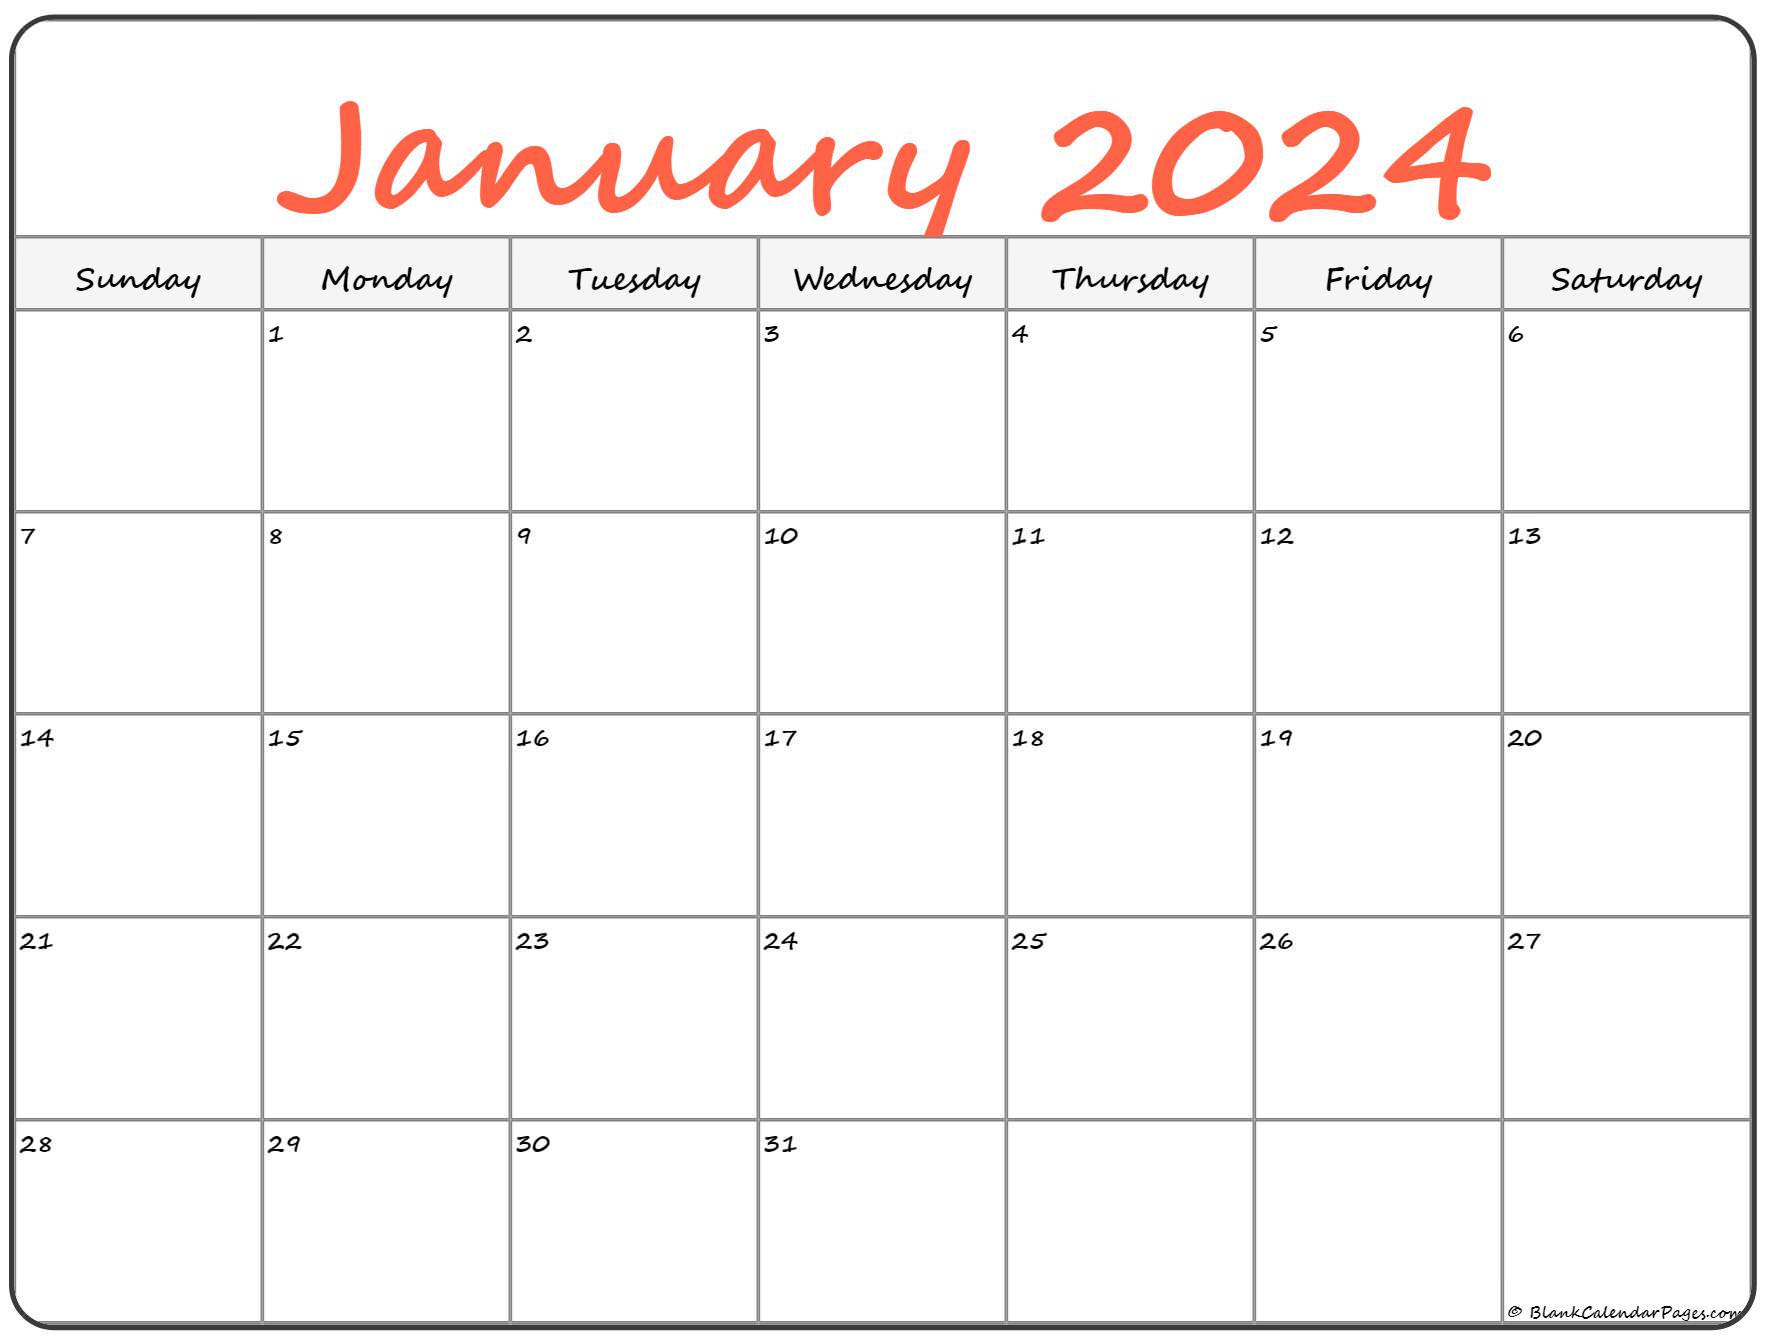 Printable Calendar Quarterly 2024 Top The Best Incredible January 2024 Calendar Blank